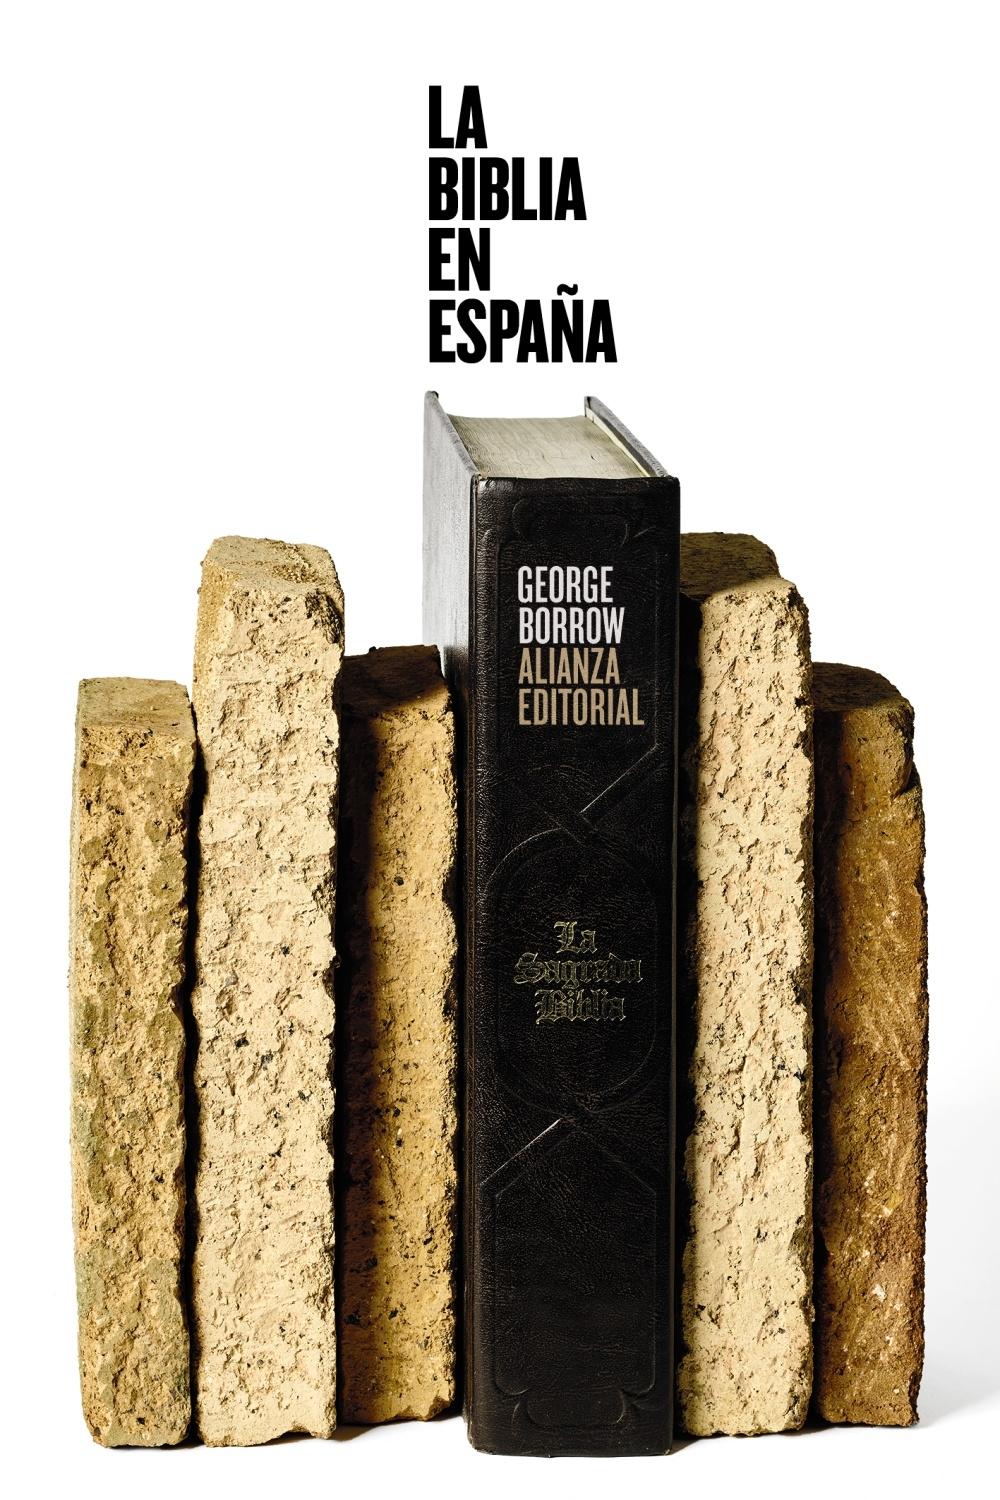 La Biblia en España. 